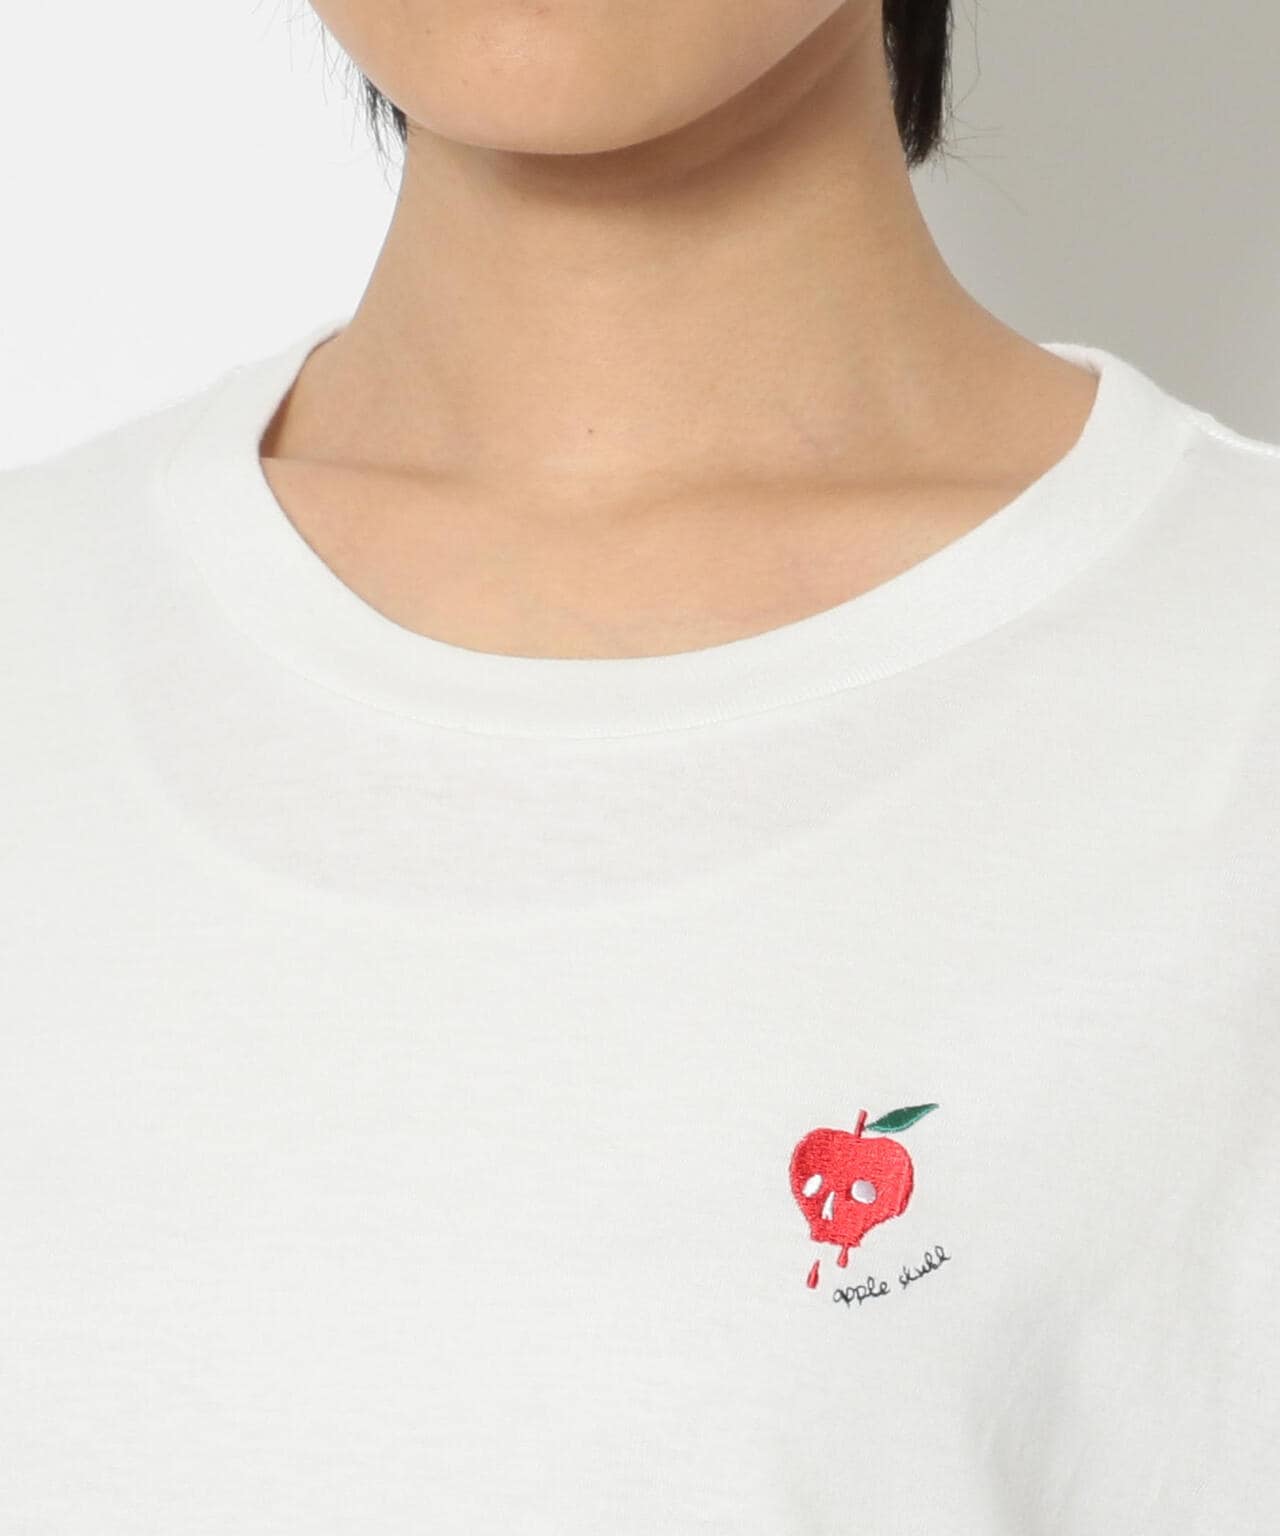 001designed by maxsix（ゼロゼロワン）ワンポイント刺繍Tシャツ